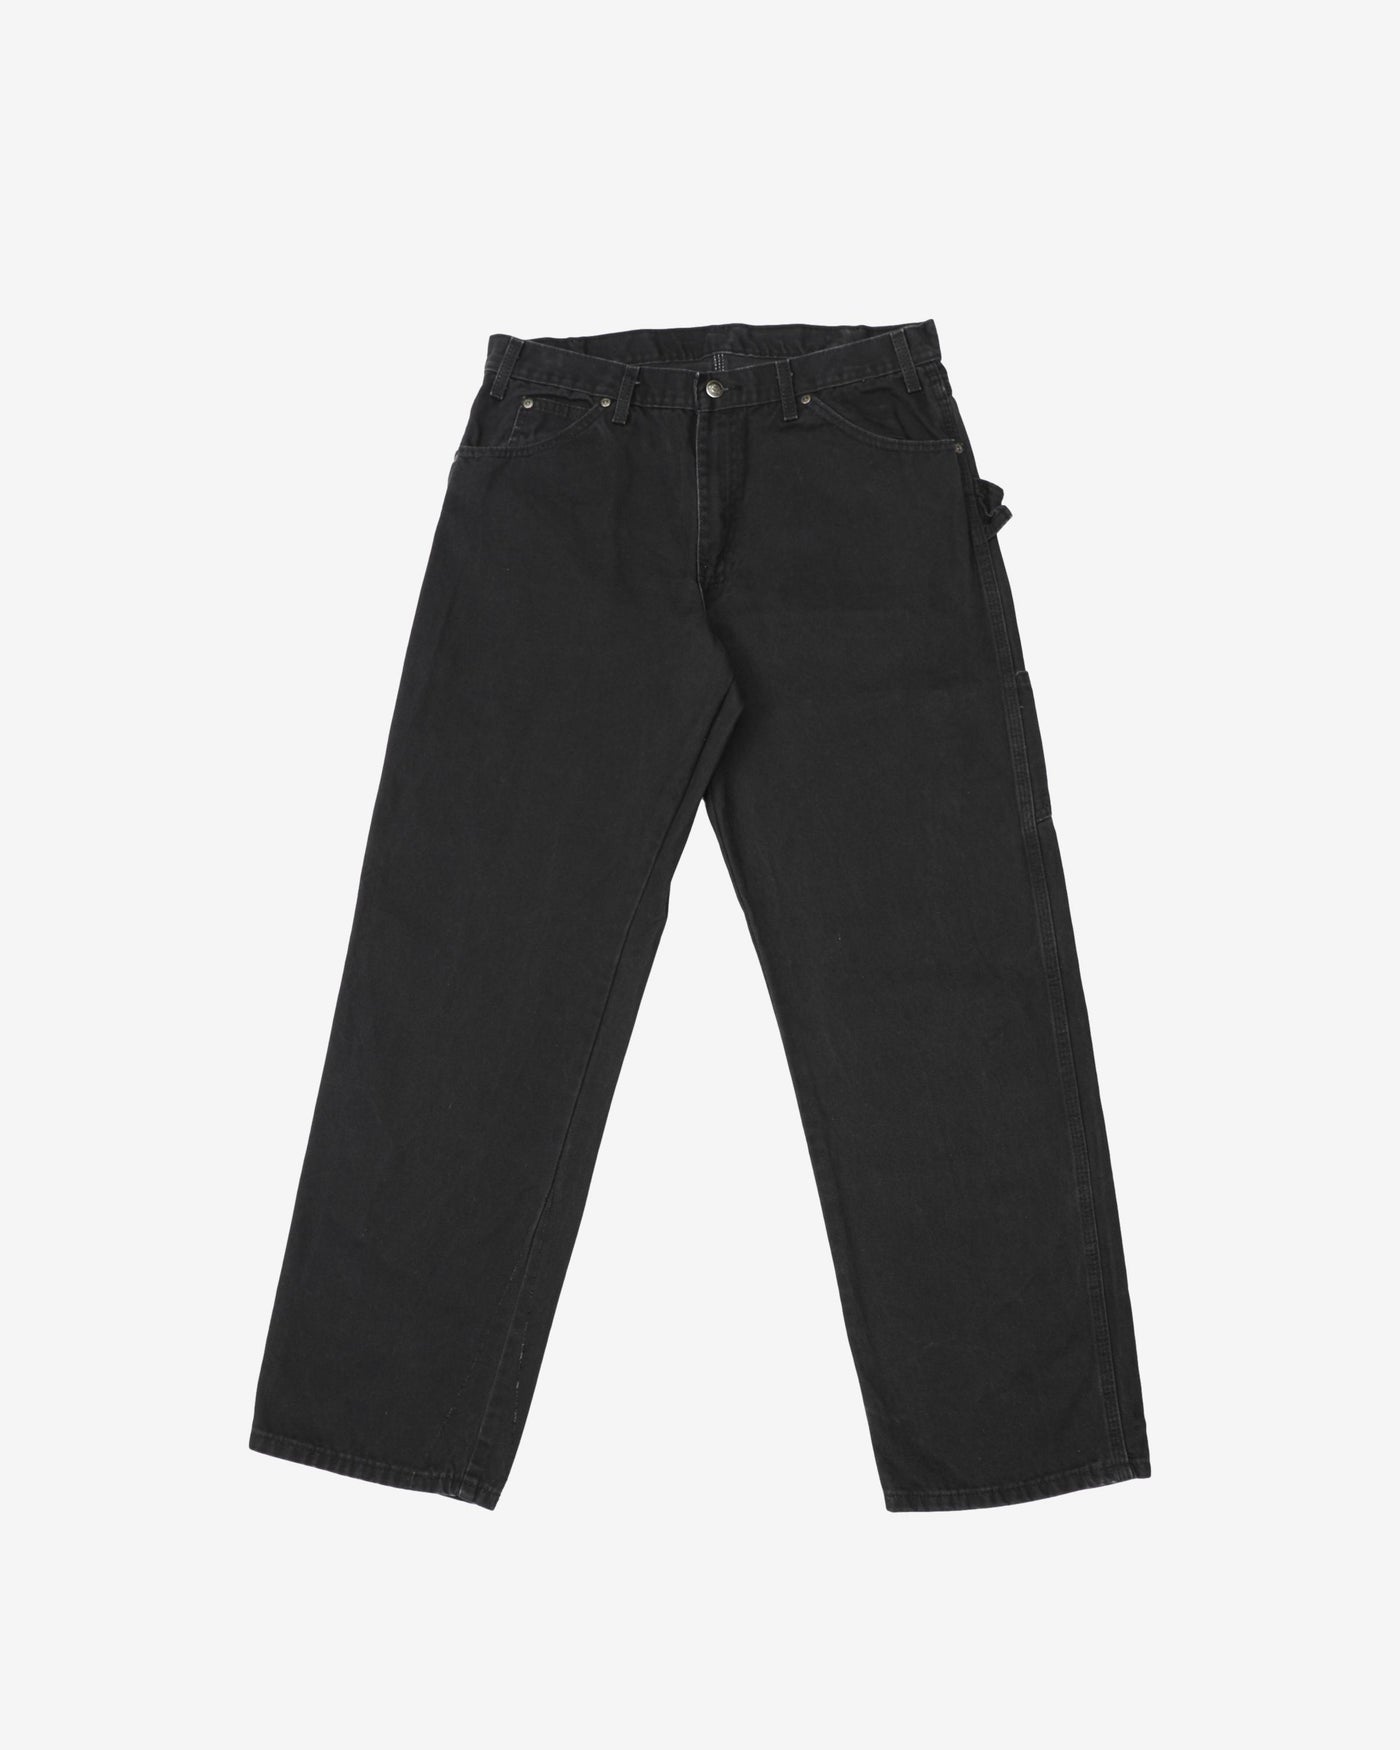 Dickies Vintage Faded Black Workwear Utility Jeans - W34 L32